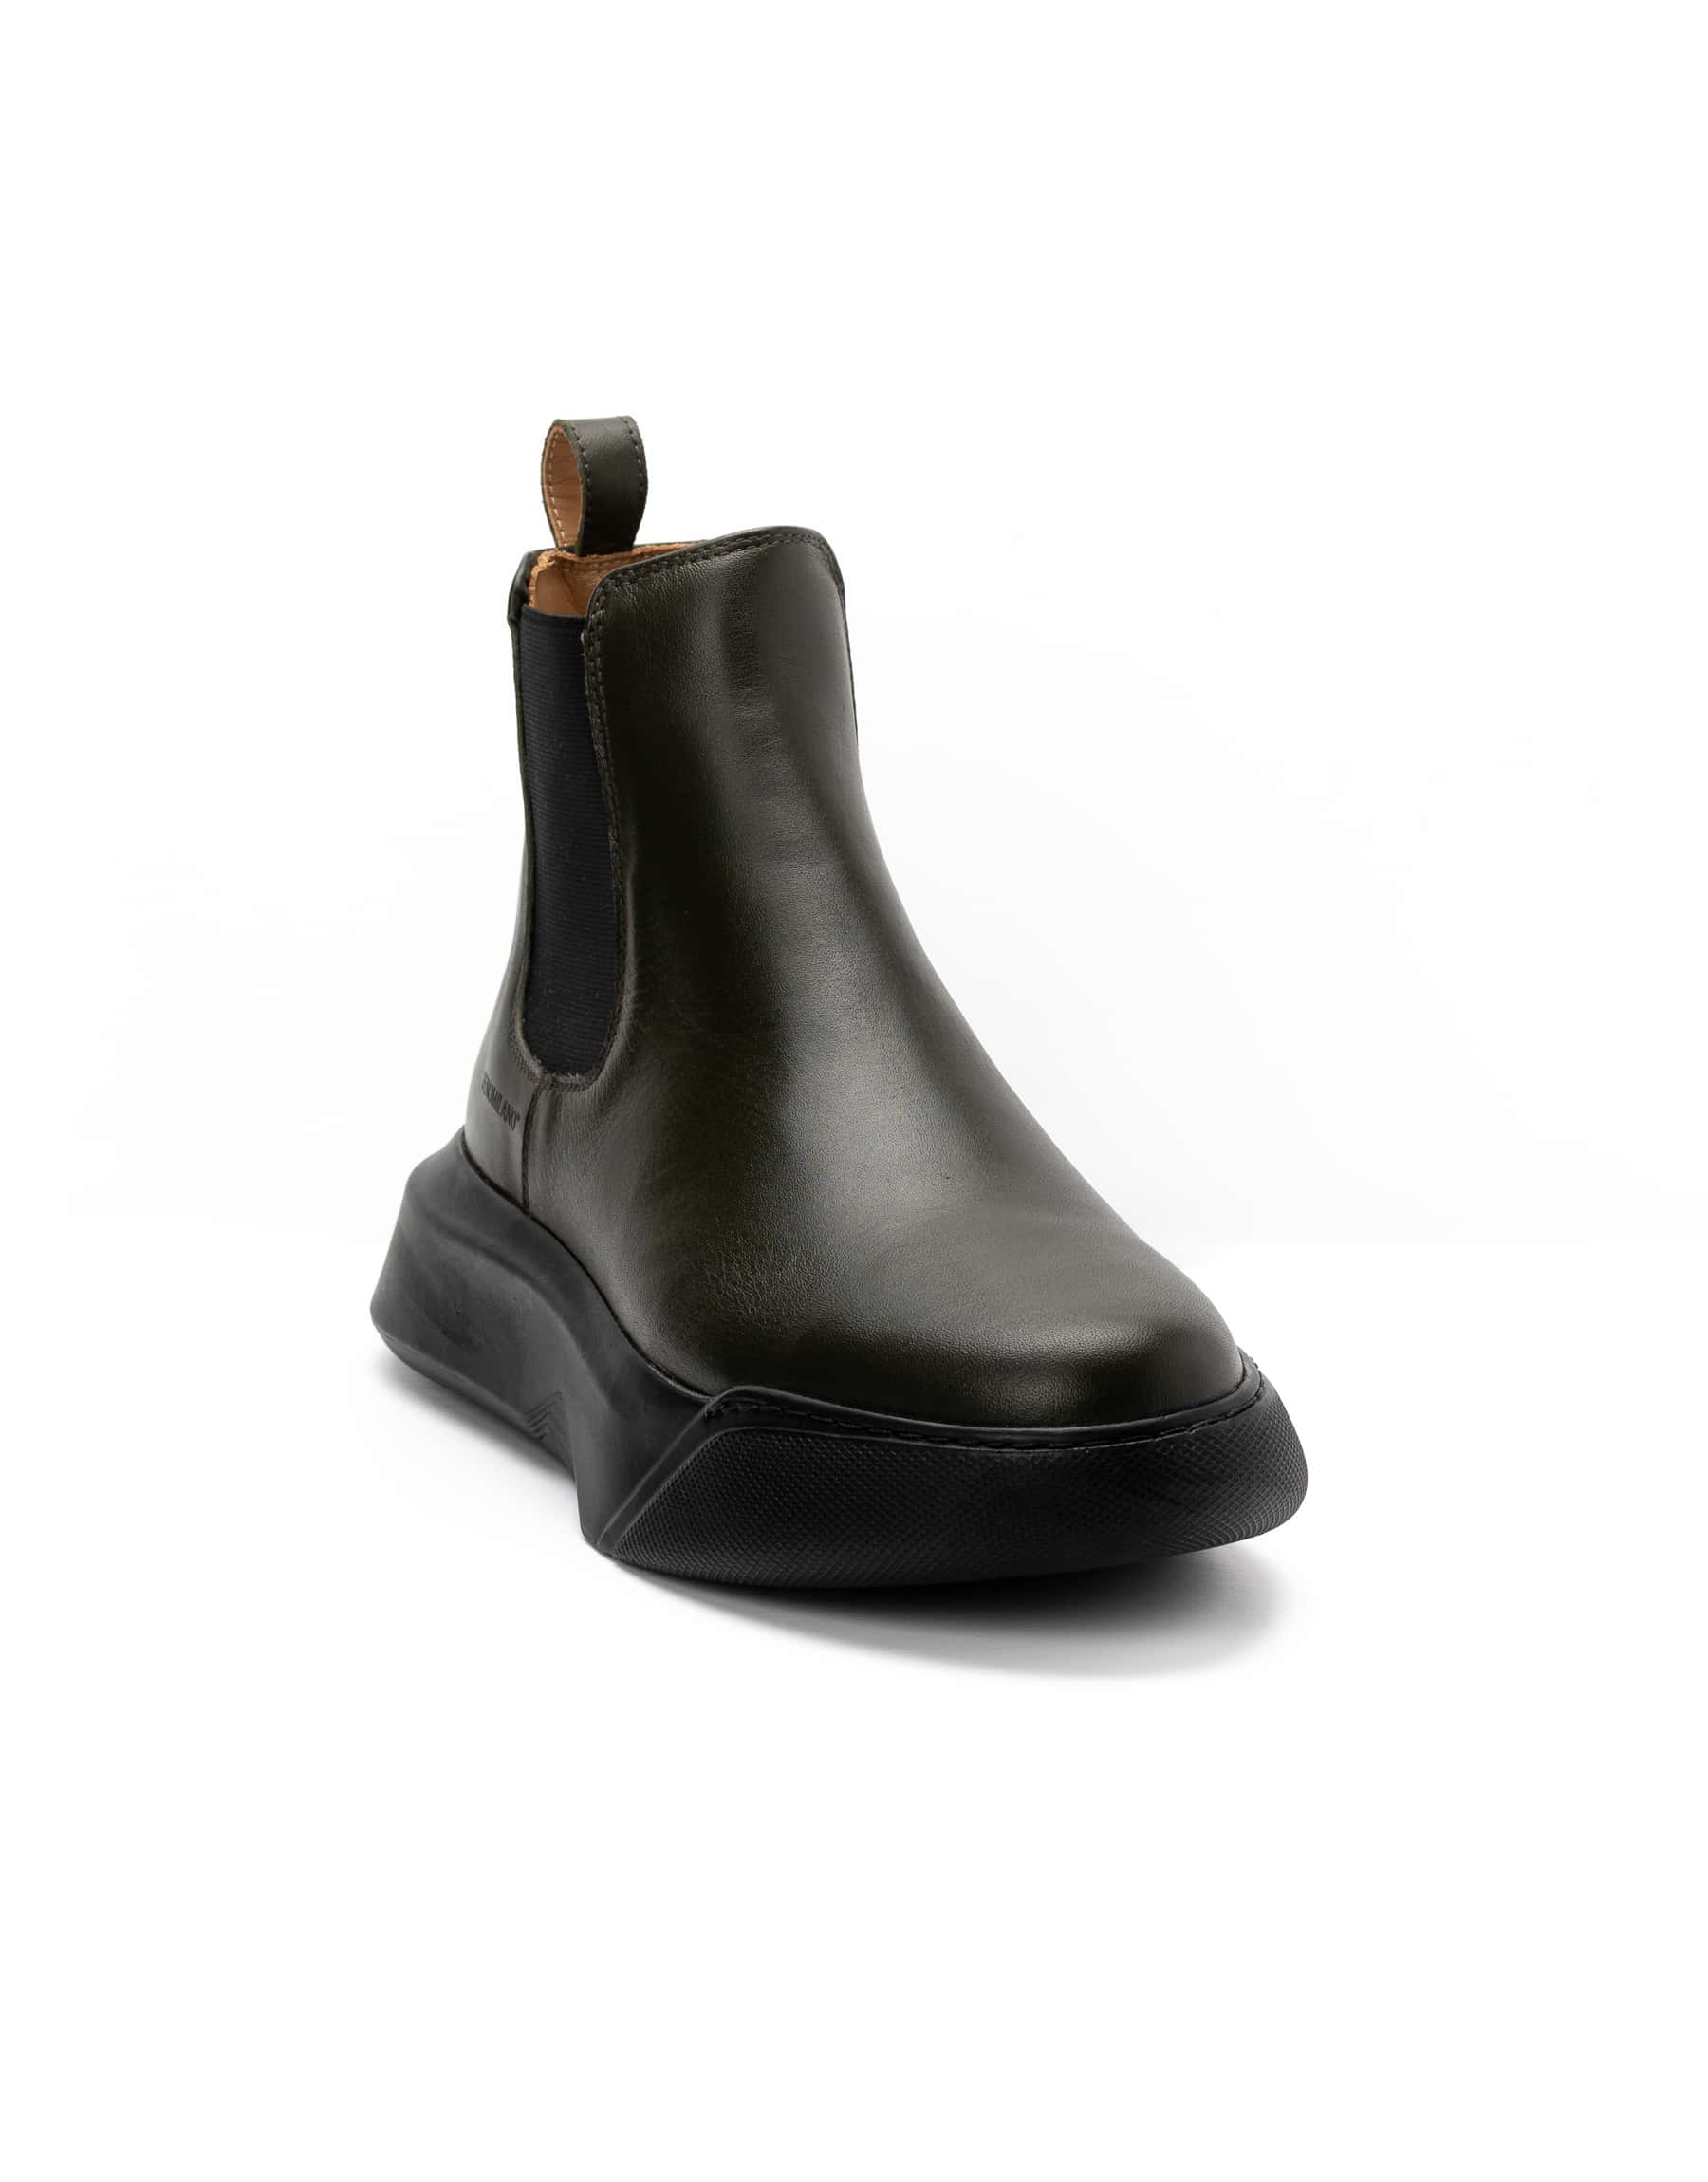 Metallic Sole Sequin Sneaker Boots in black | N°21 | Official Online Store